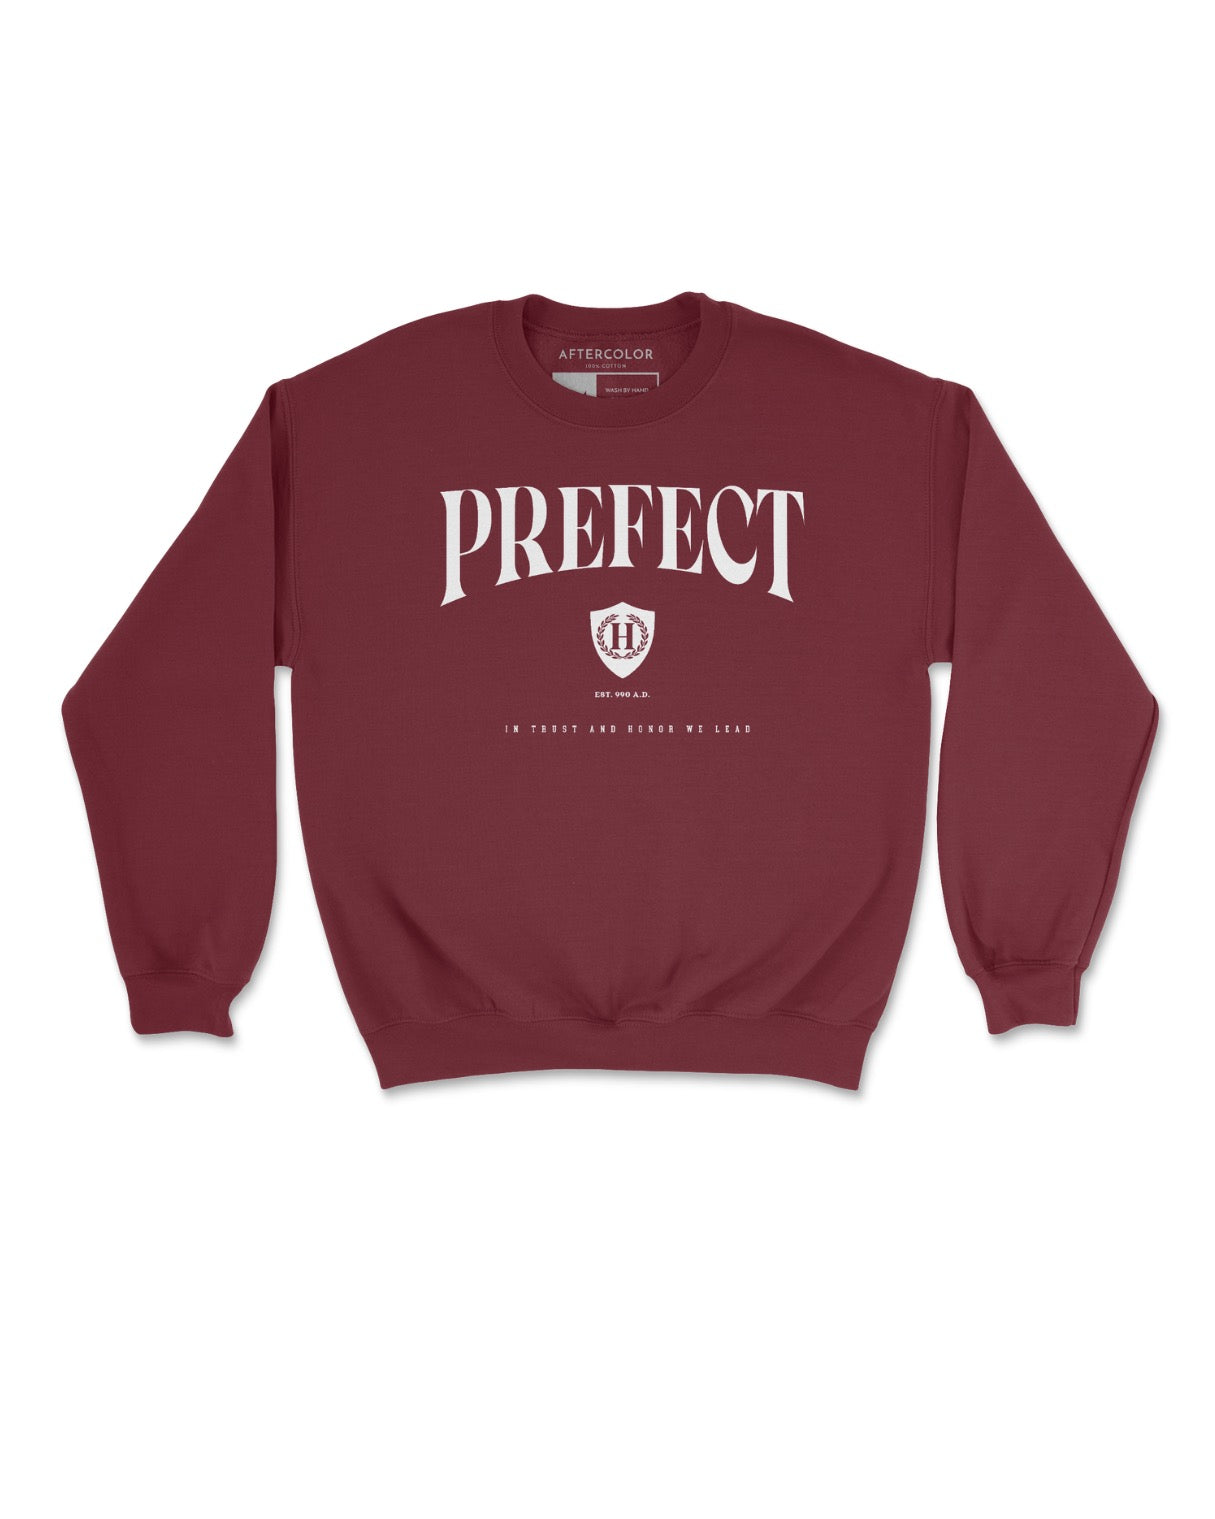 Prefect Crewneck Sweatshirt/Hoodie